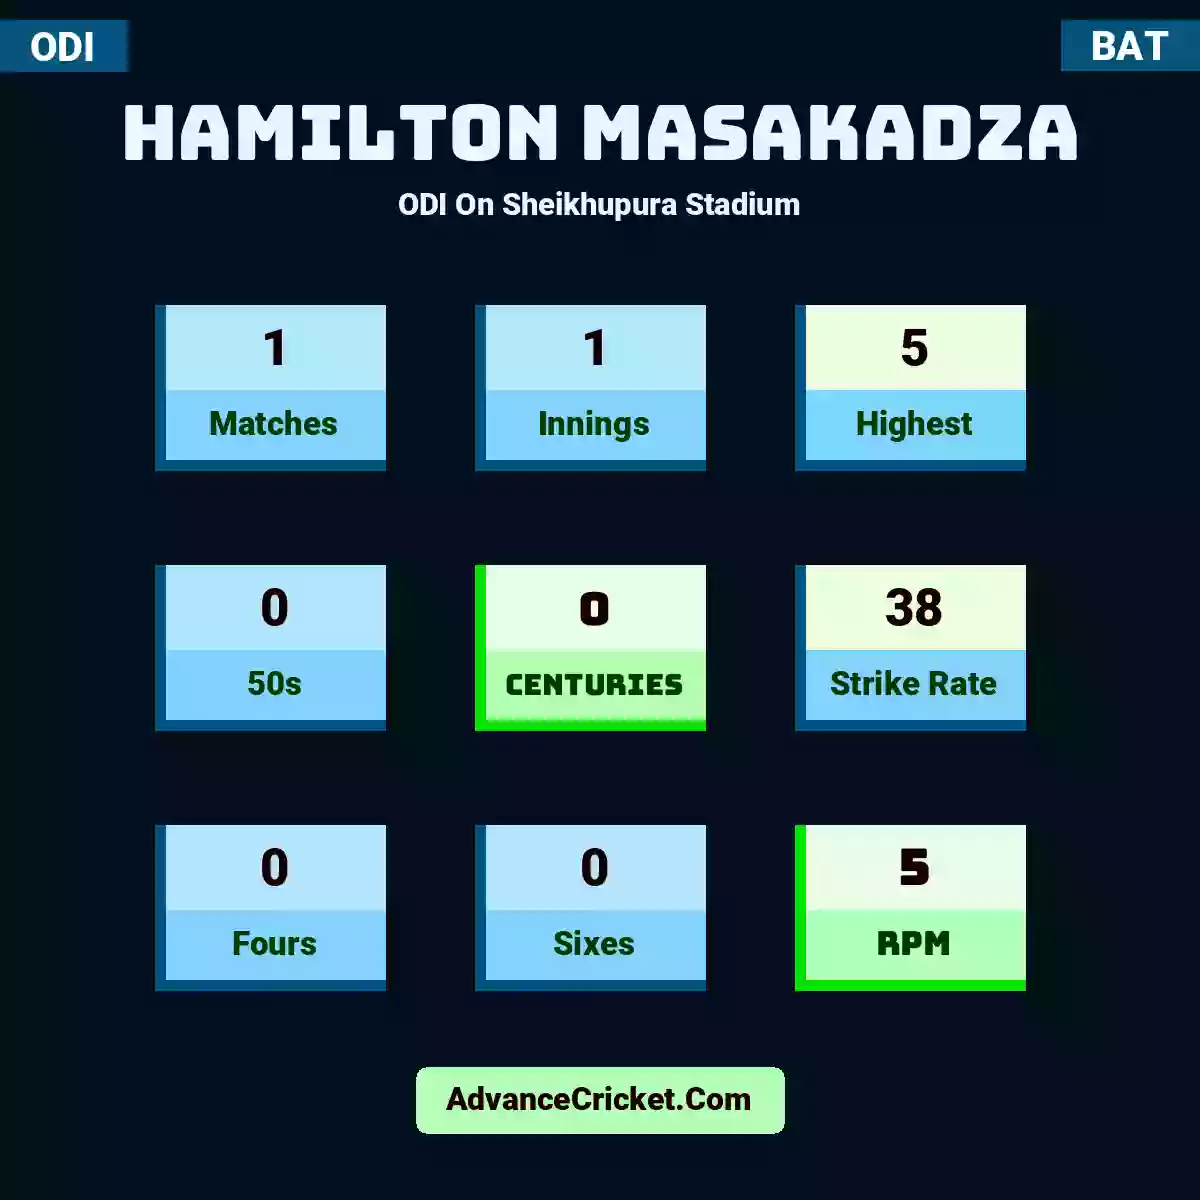 Hamilton Masakadza ODI  On Sheikhupura Stadium, Hamilton Masakadza played 1 matches, scored 5 runs as highest, 0 half-centuries, and 0 centuries, with a strike rate of 38. H.Masakadza hit 0 fours and 0 sixes, with an RPM of 5.